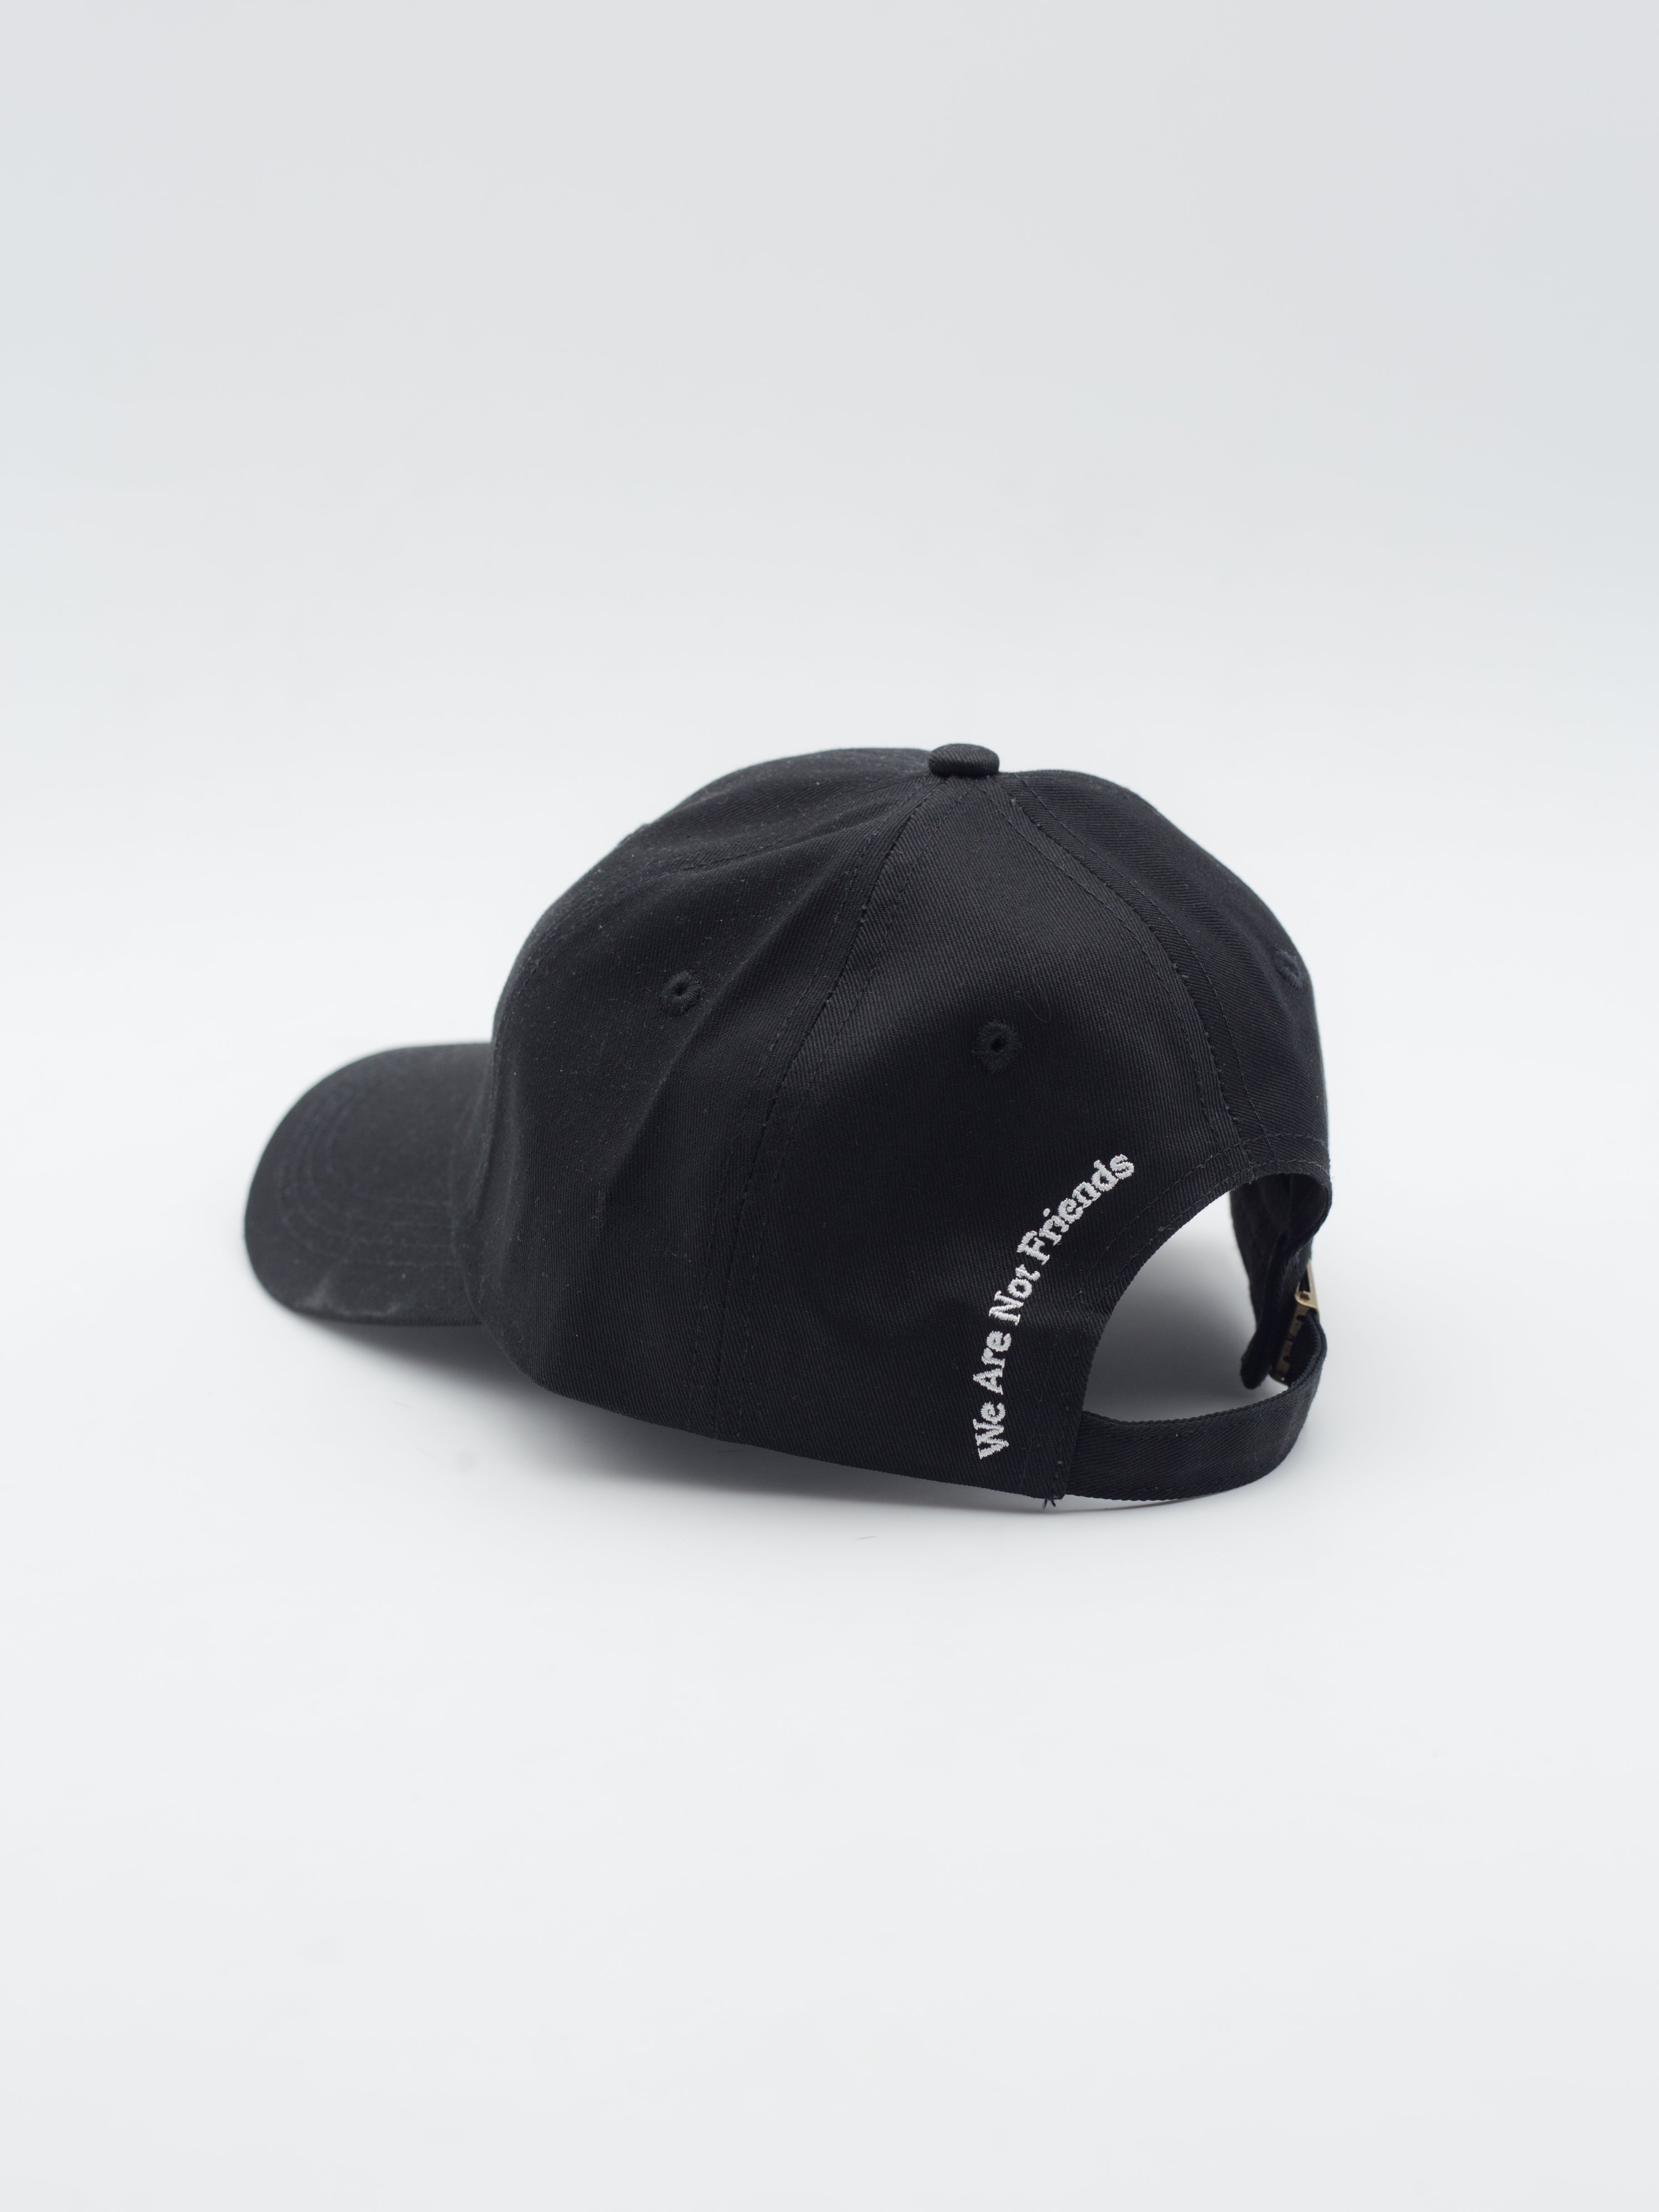 The W Black Hat